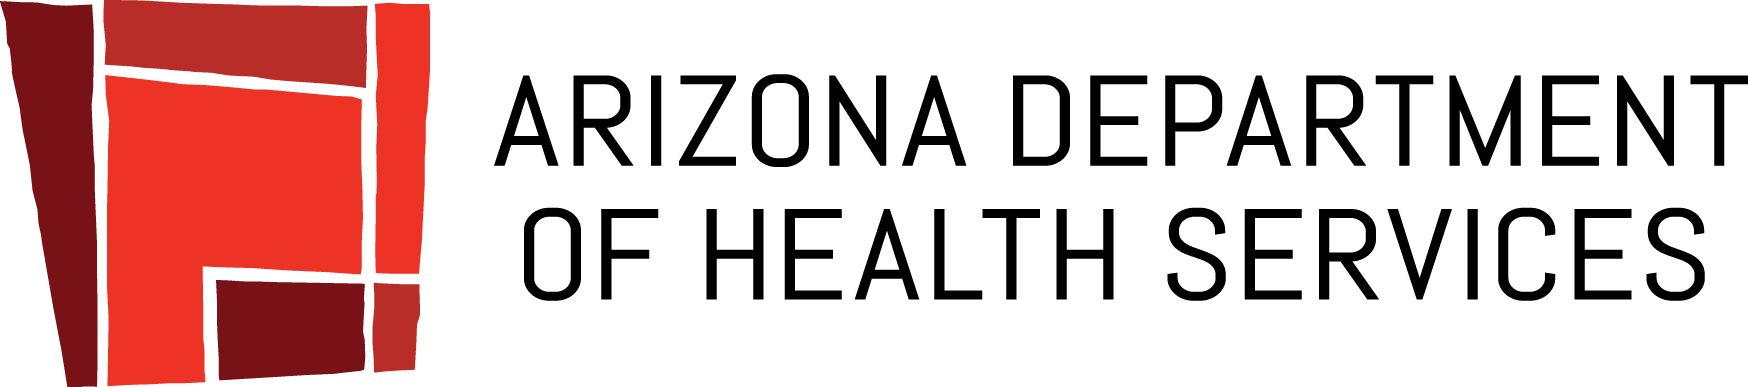 Arizona Department of Health Services Logo